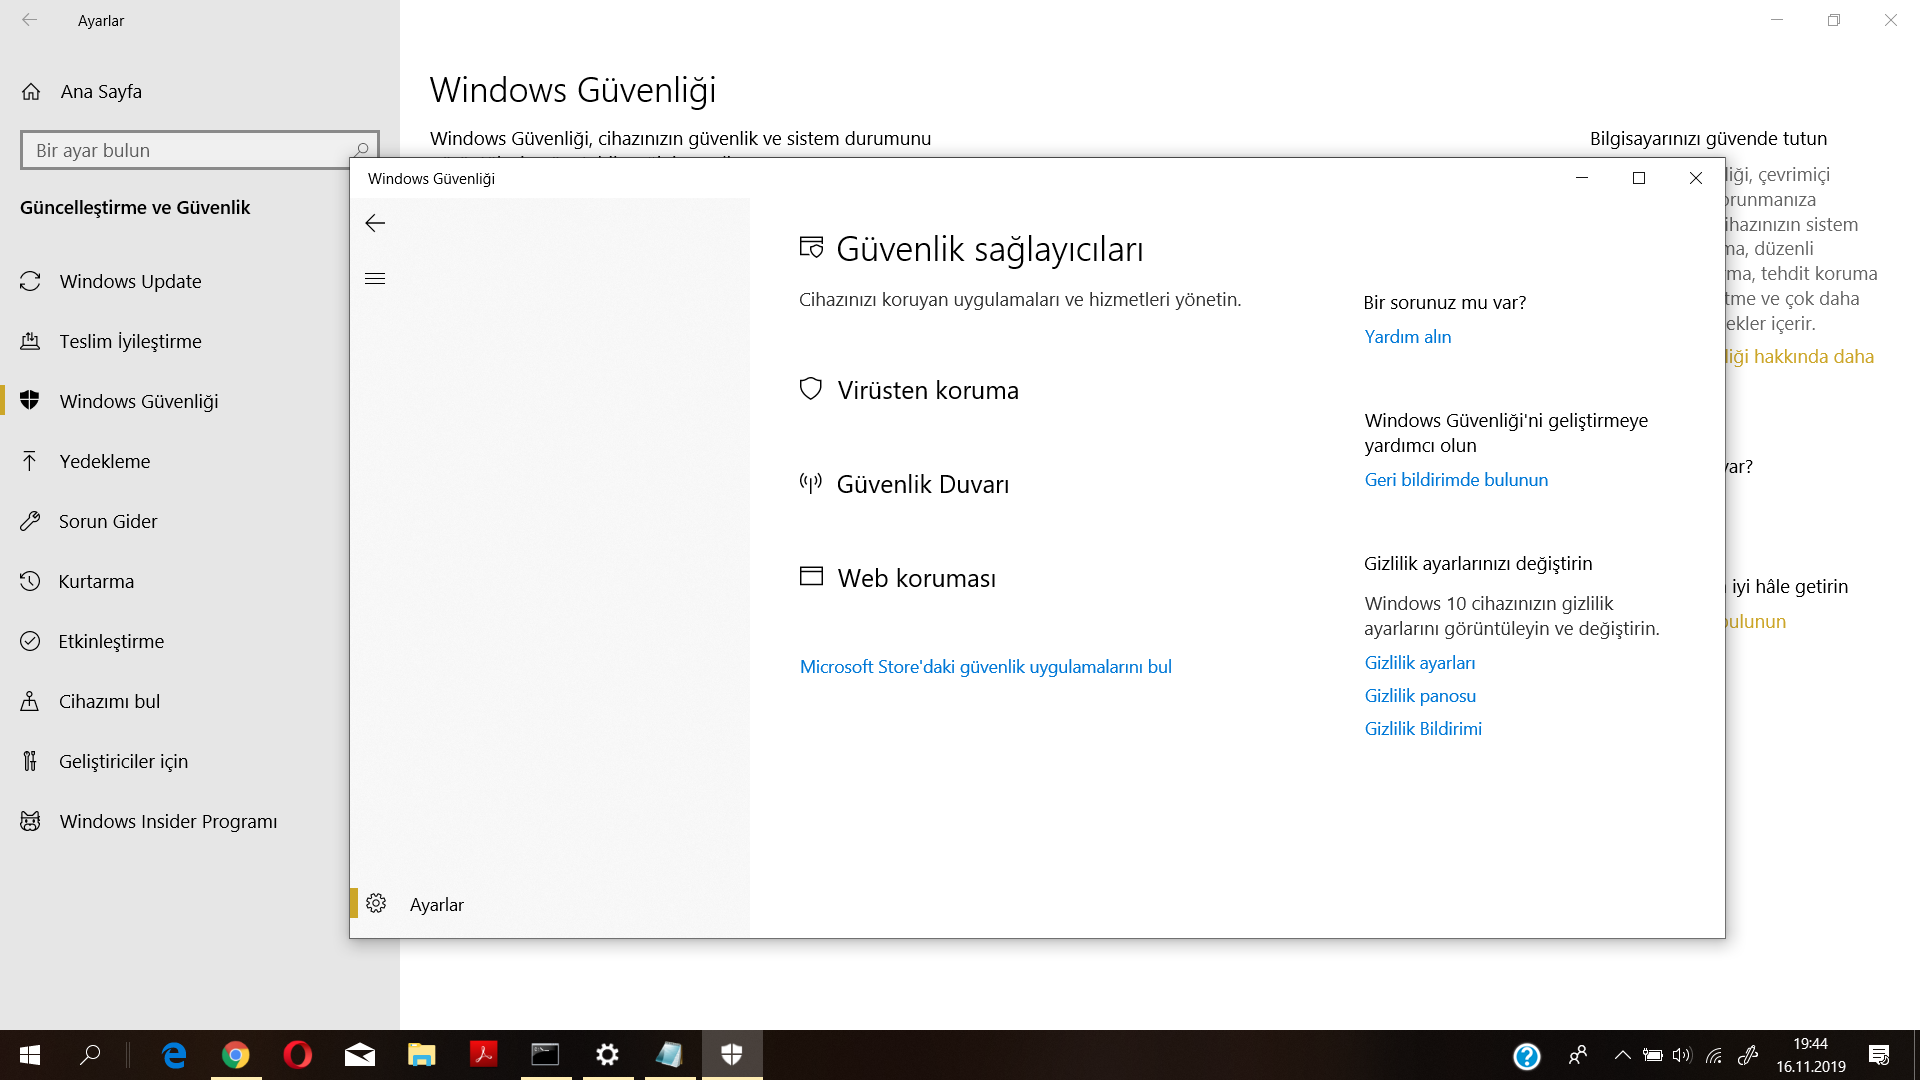 Windows Security does not work! 65c3b1ff-ddd1-4ef9-9768-9c247364b154?upload=true.png